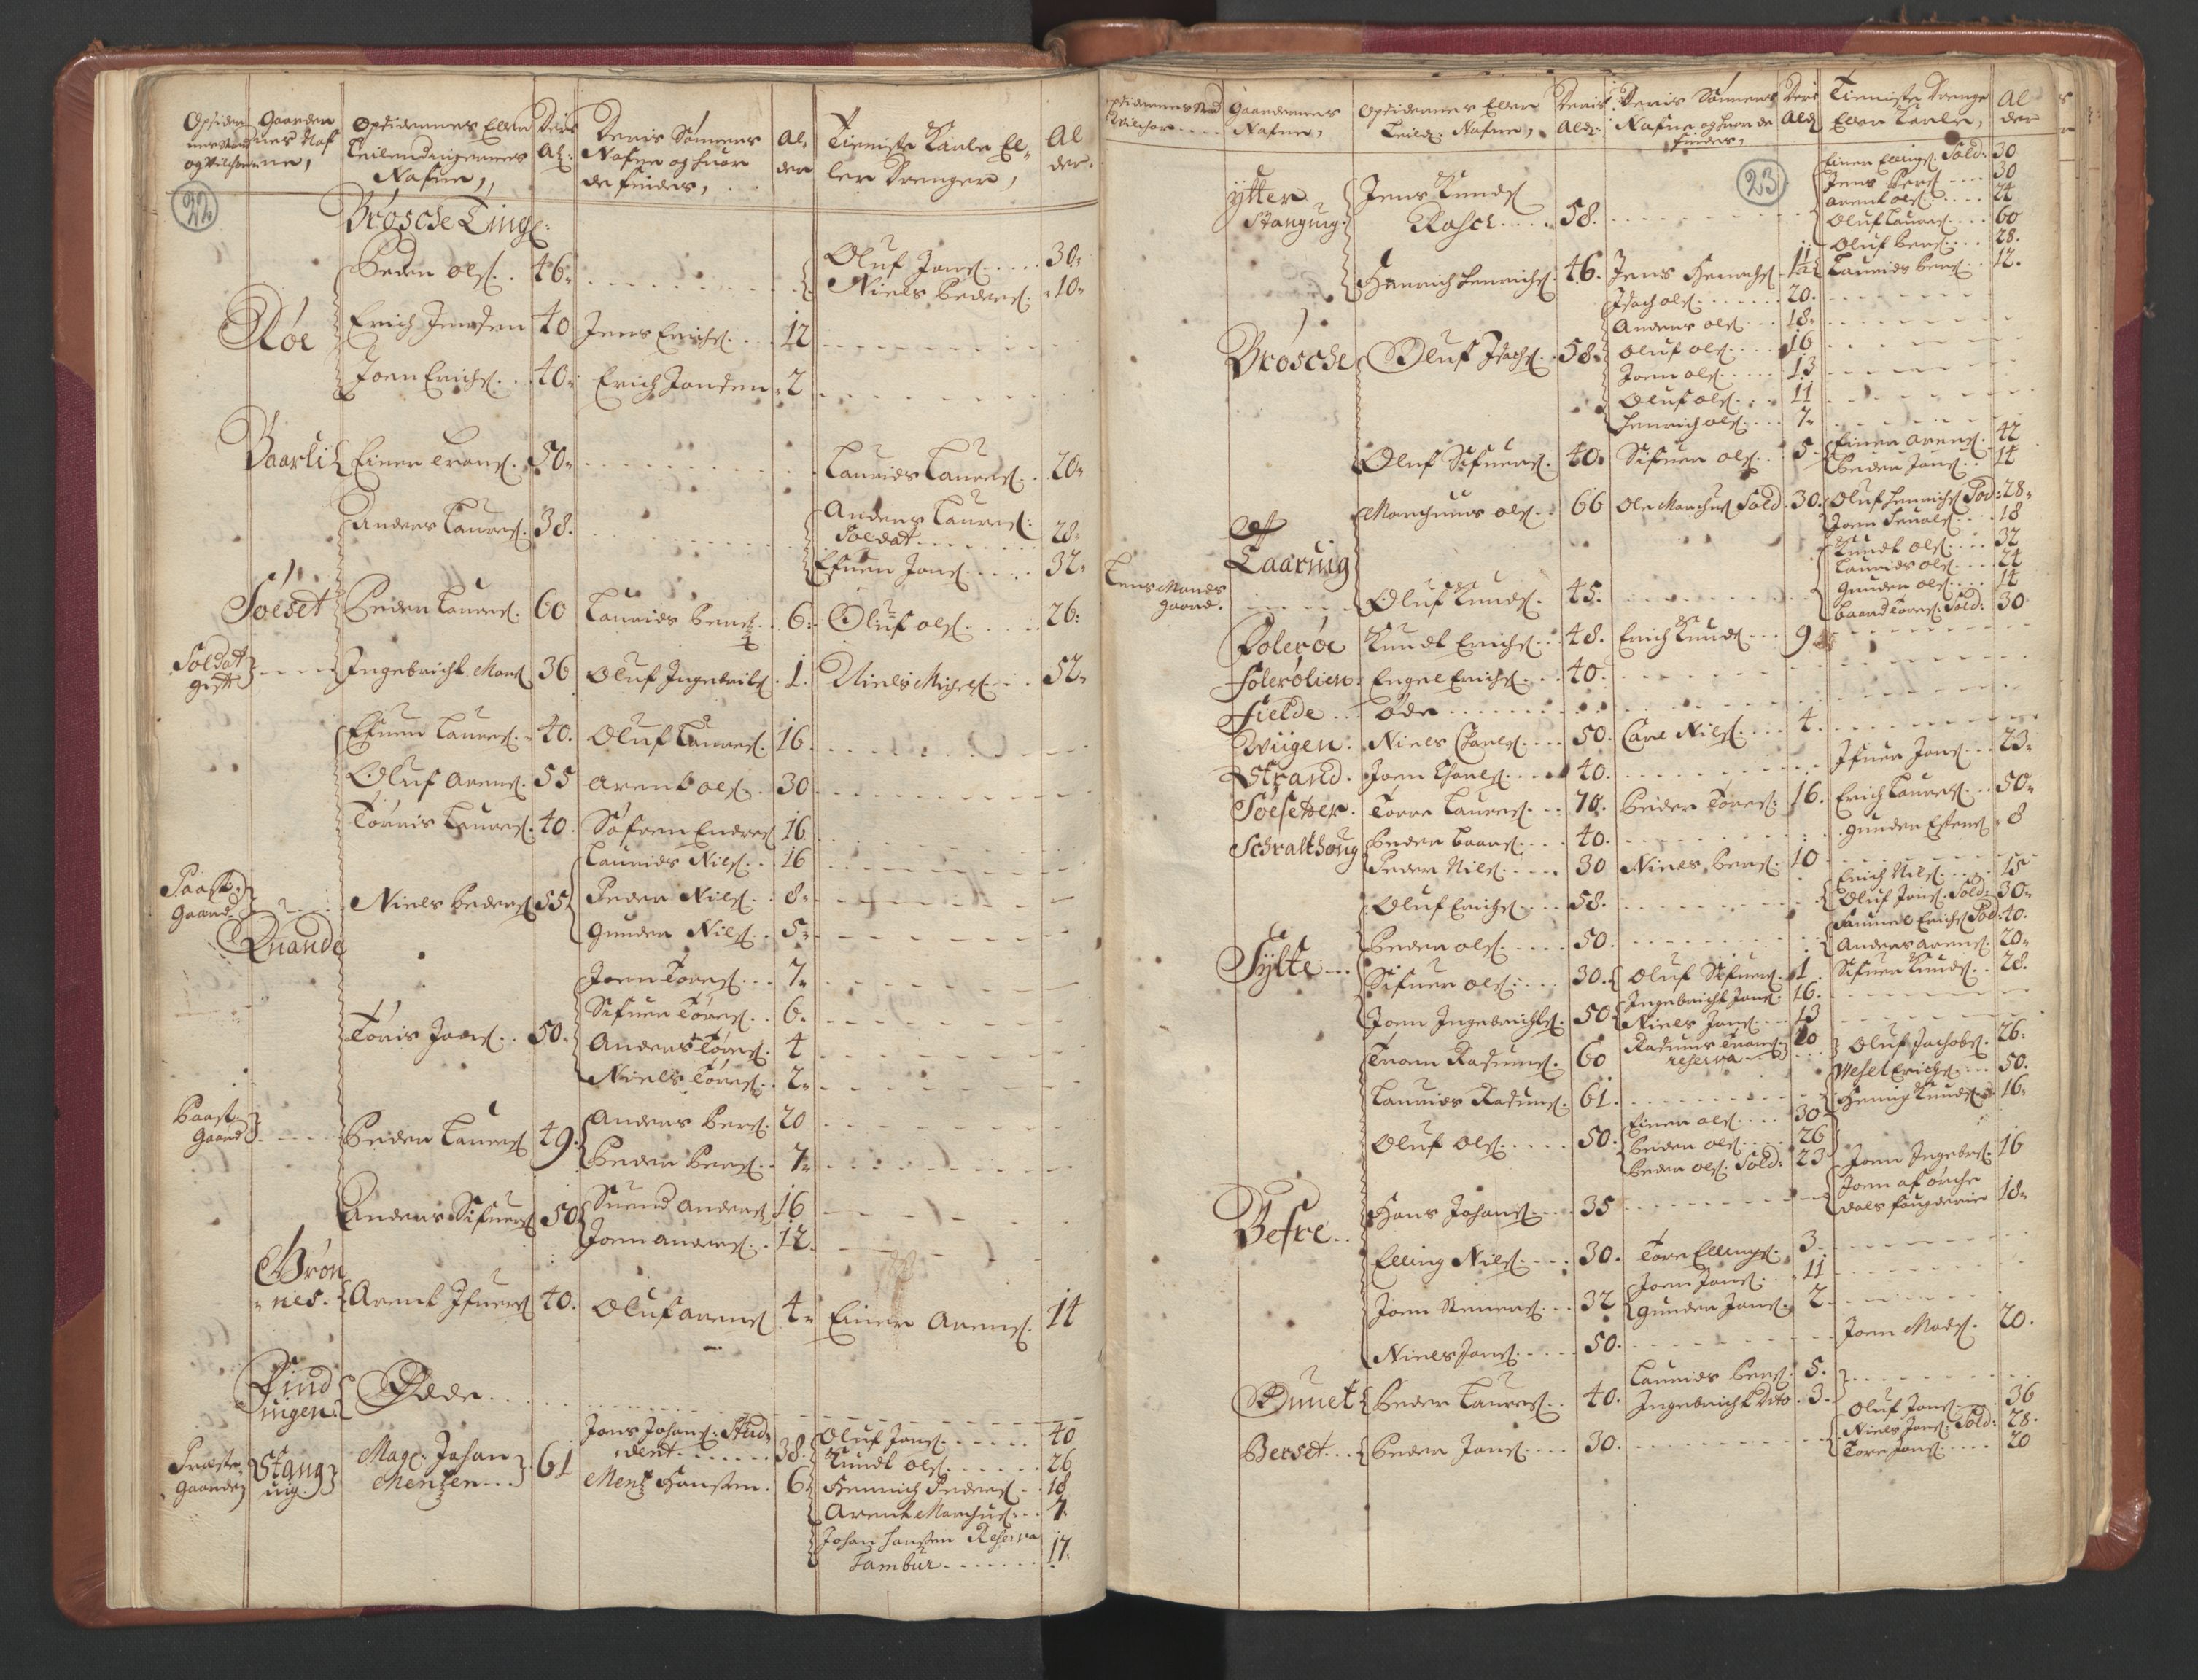 RA, Census (manntall) 1701, no. 11: Nordmøre fogderi and Romsdal fogderi, 1701, p. 22-23